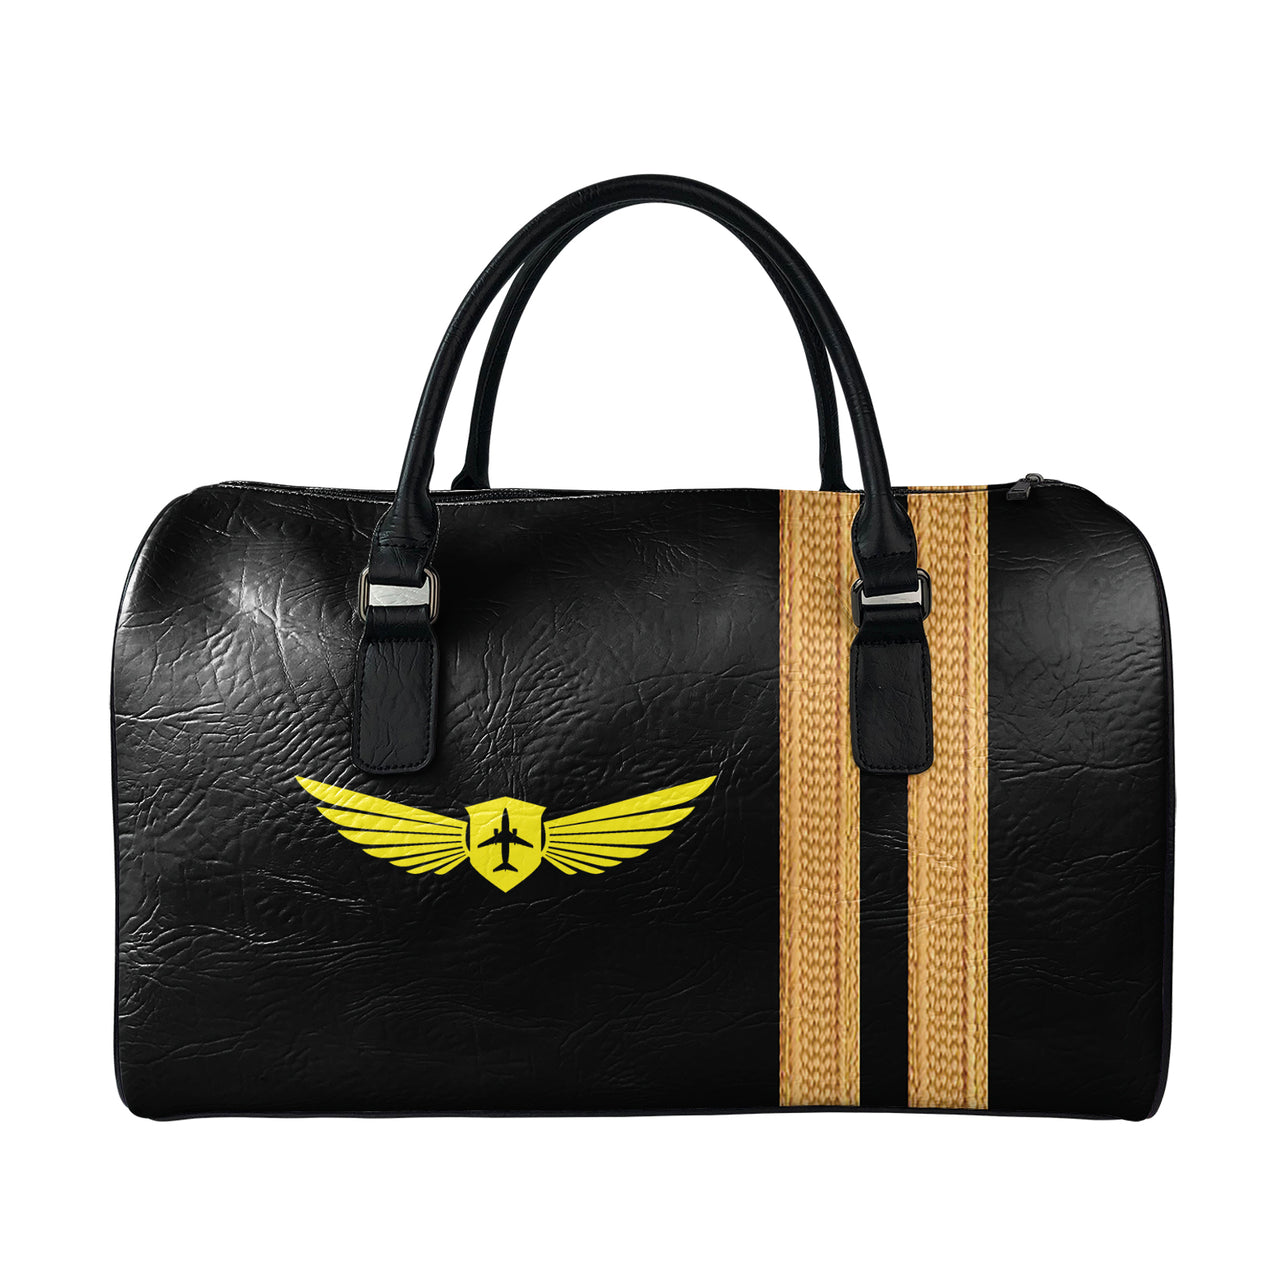 Name & Badge & Golden Special Pilot Epaulettes (4,3,2 Lines) Designed Leather Travel Bag